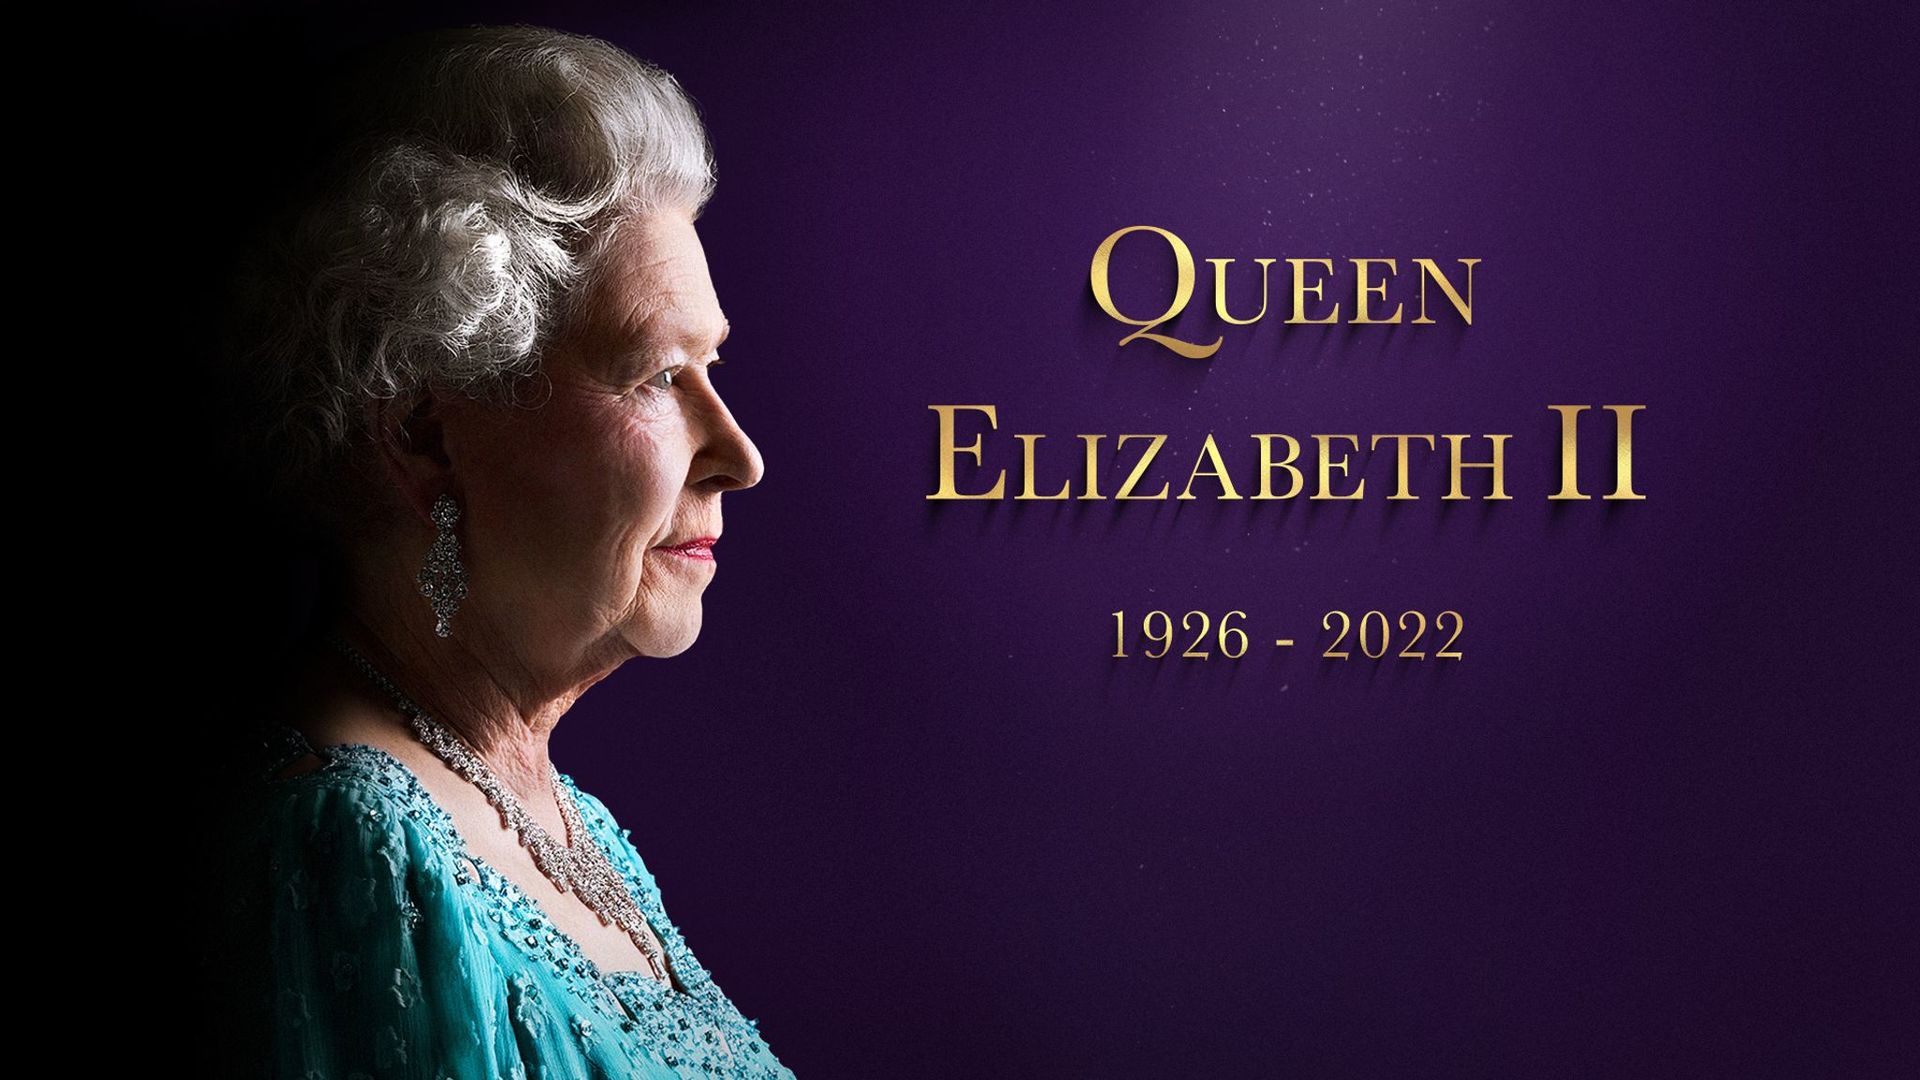 Queen Elizabeth II - 1926 - 2022 Rest in Peace your majesty.